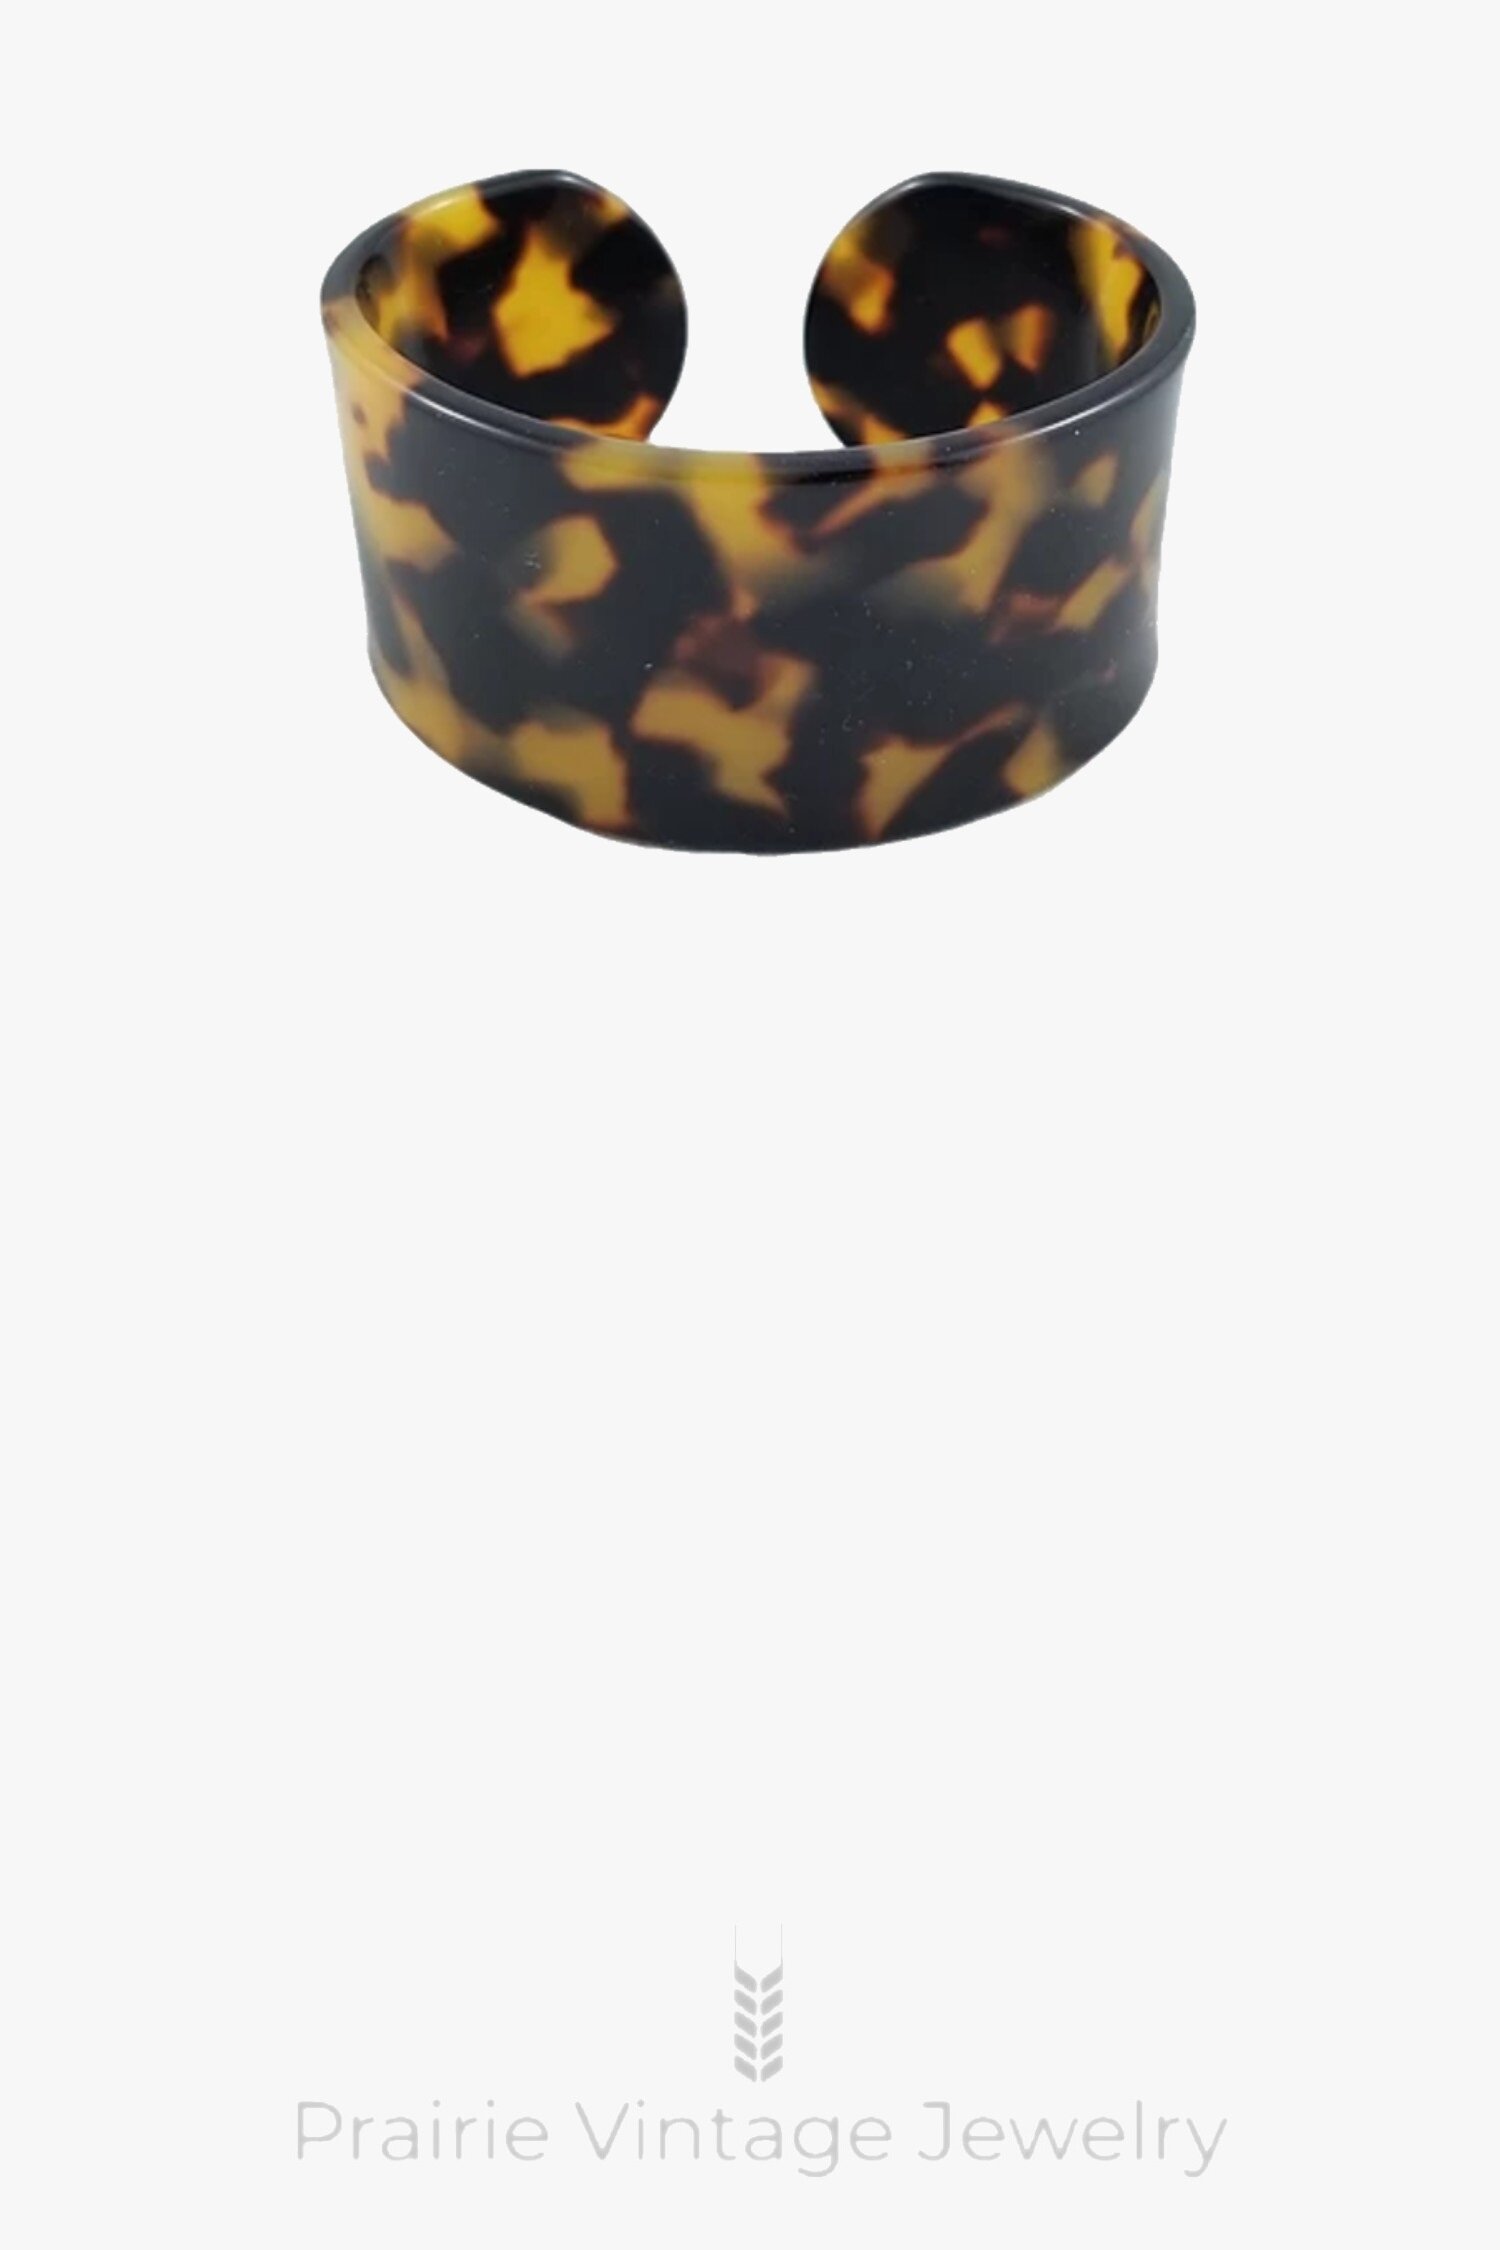 Caiyao Colorful Square Acrylic Resin Bangle Bracelet Wristbands Tortoiseshell Acetate Plate Cuff Bracelet Vintage Wide Irregular Geometric Plastic Bracelet for Women Teen Girl Jewelry 